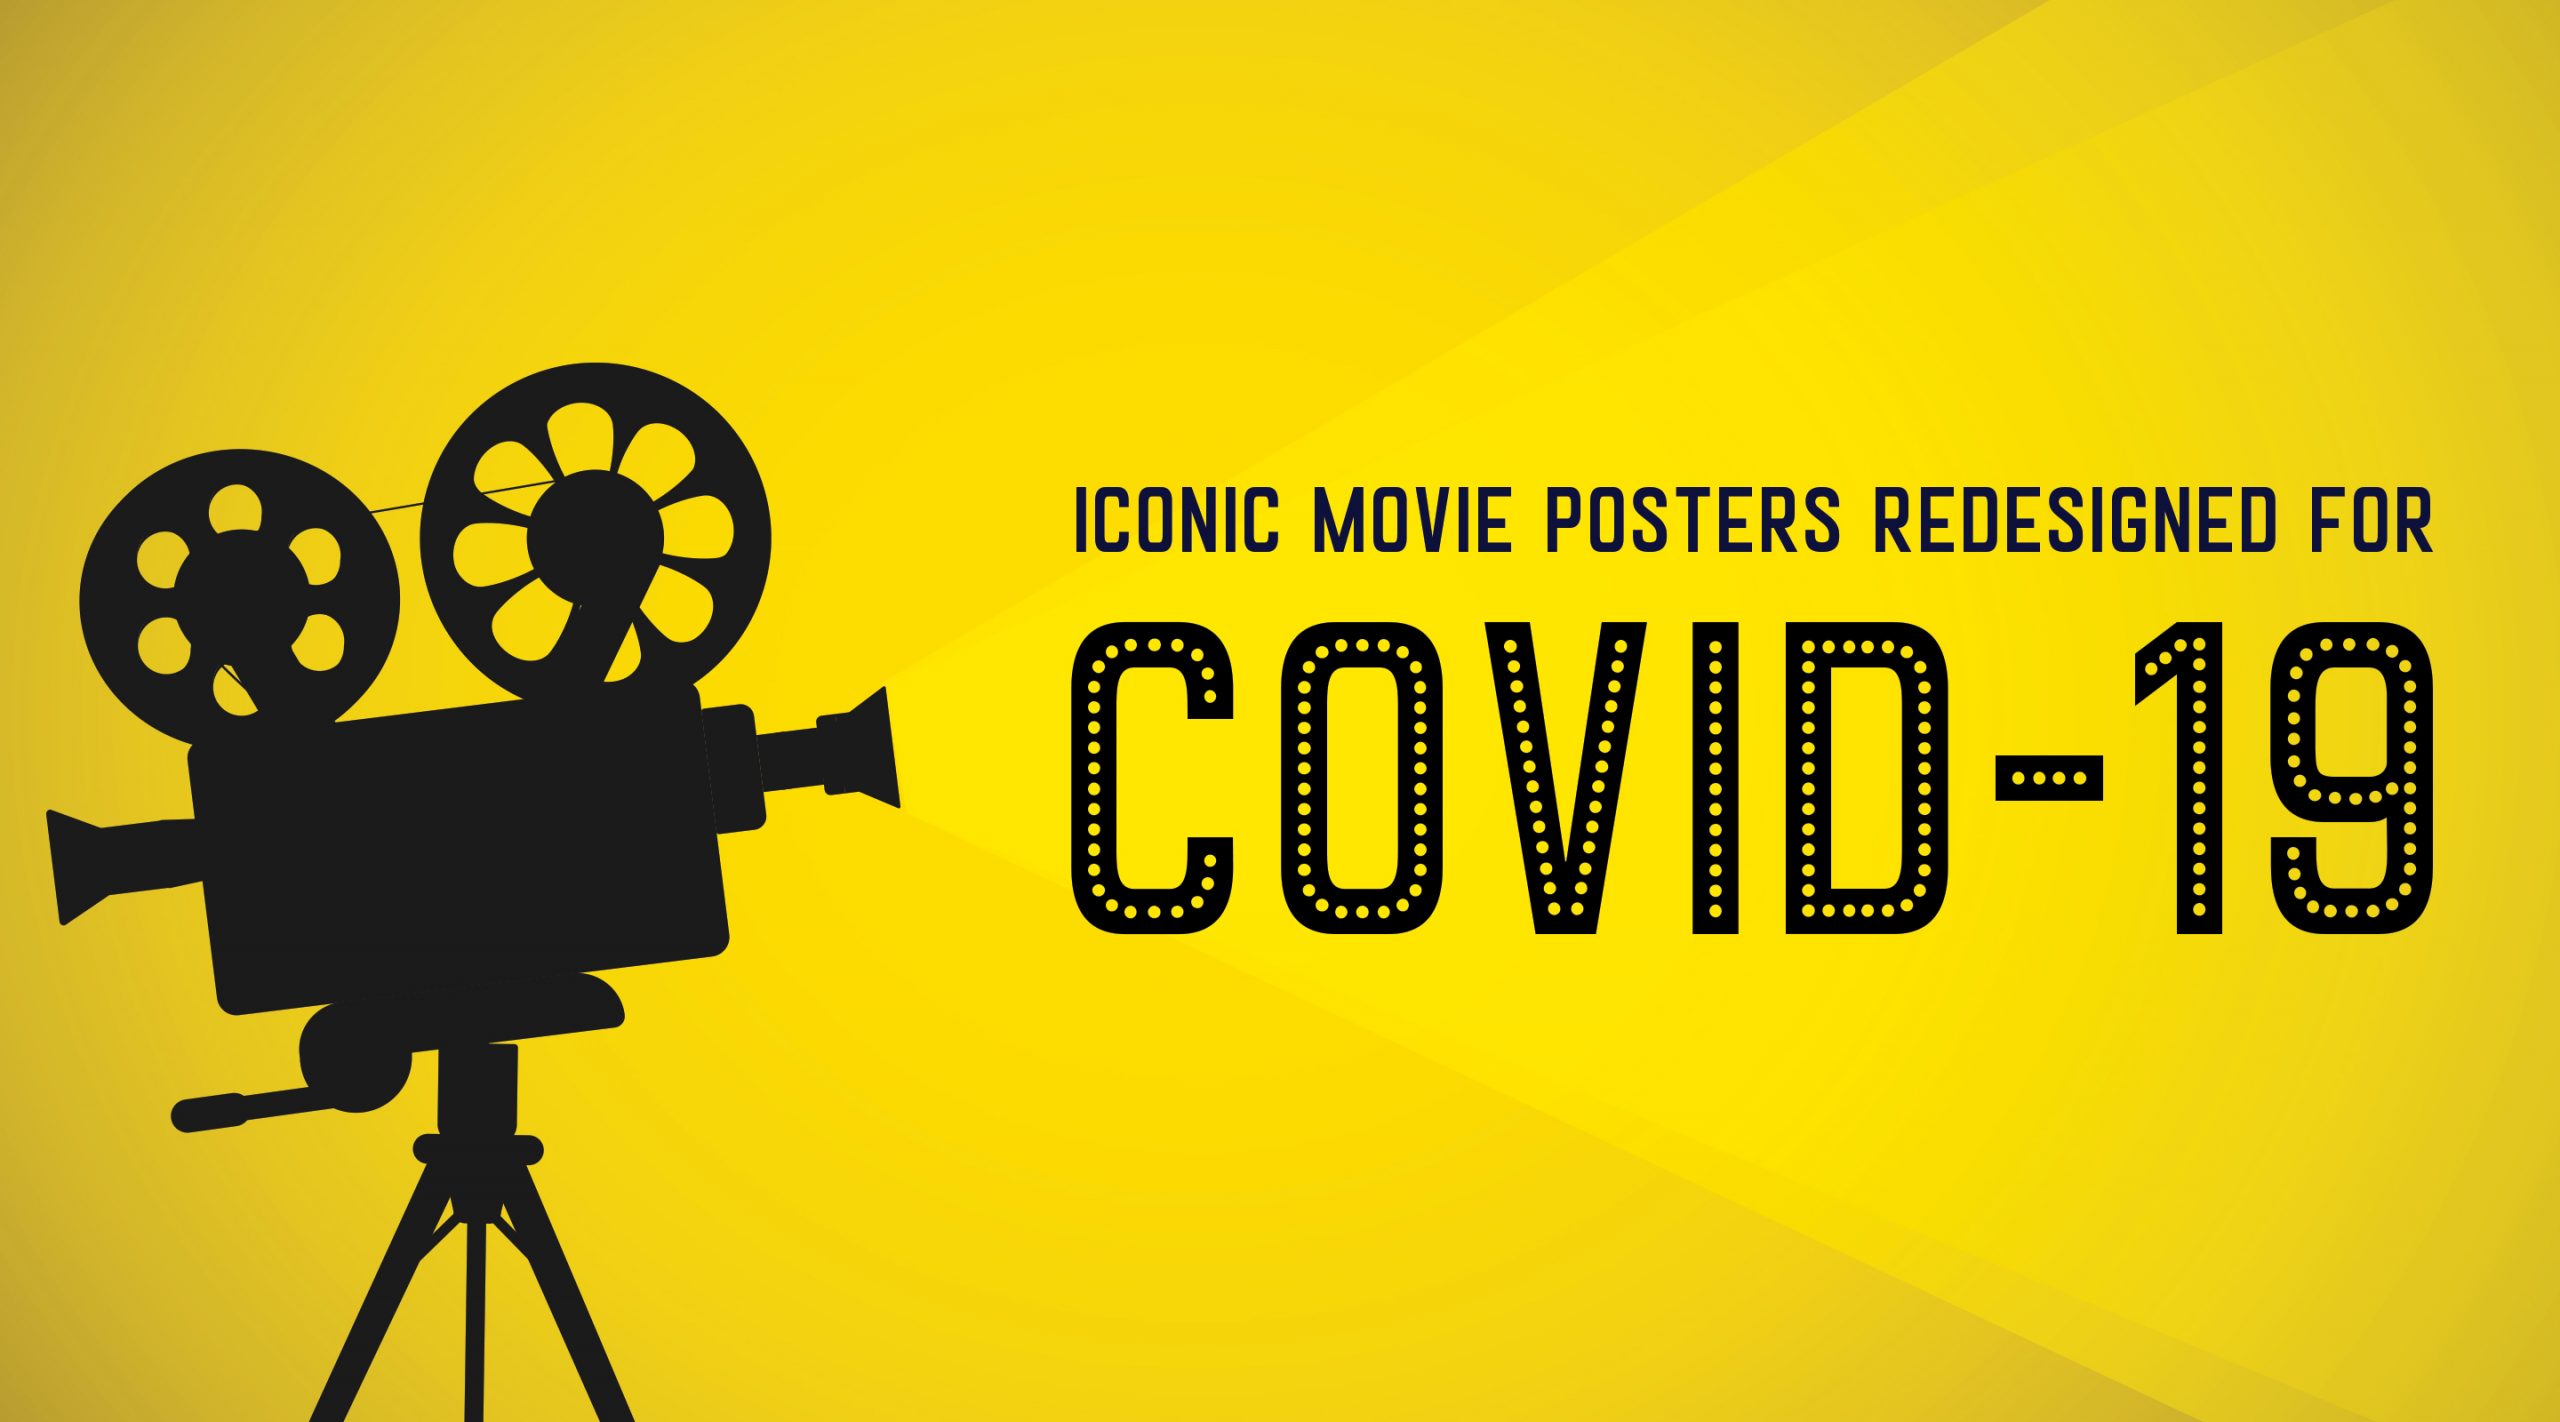 redesigning movie posters for coronavirus